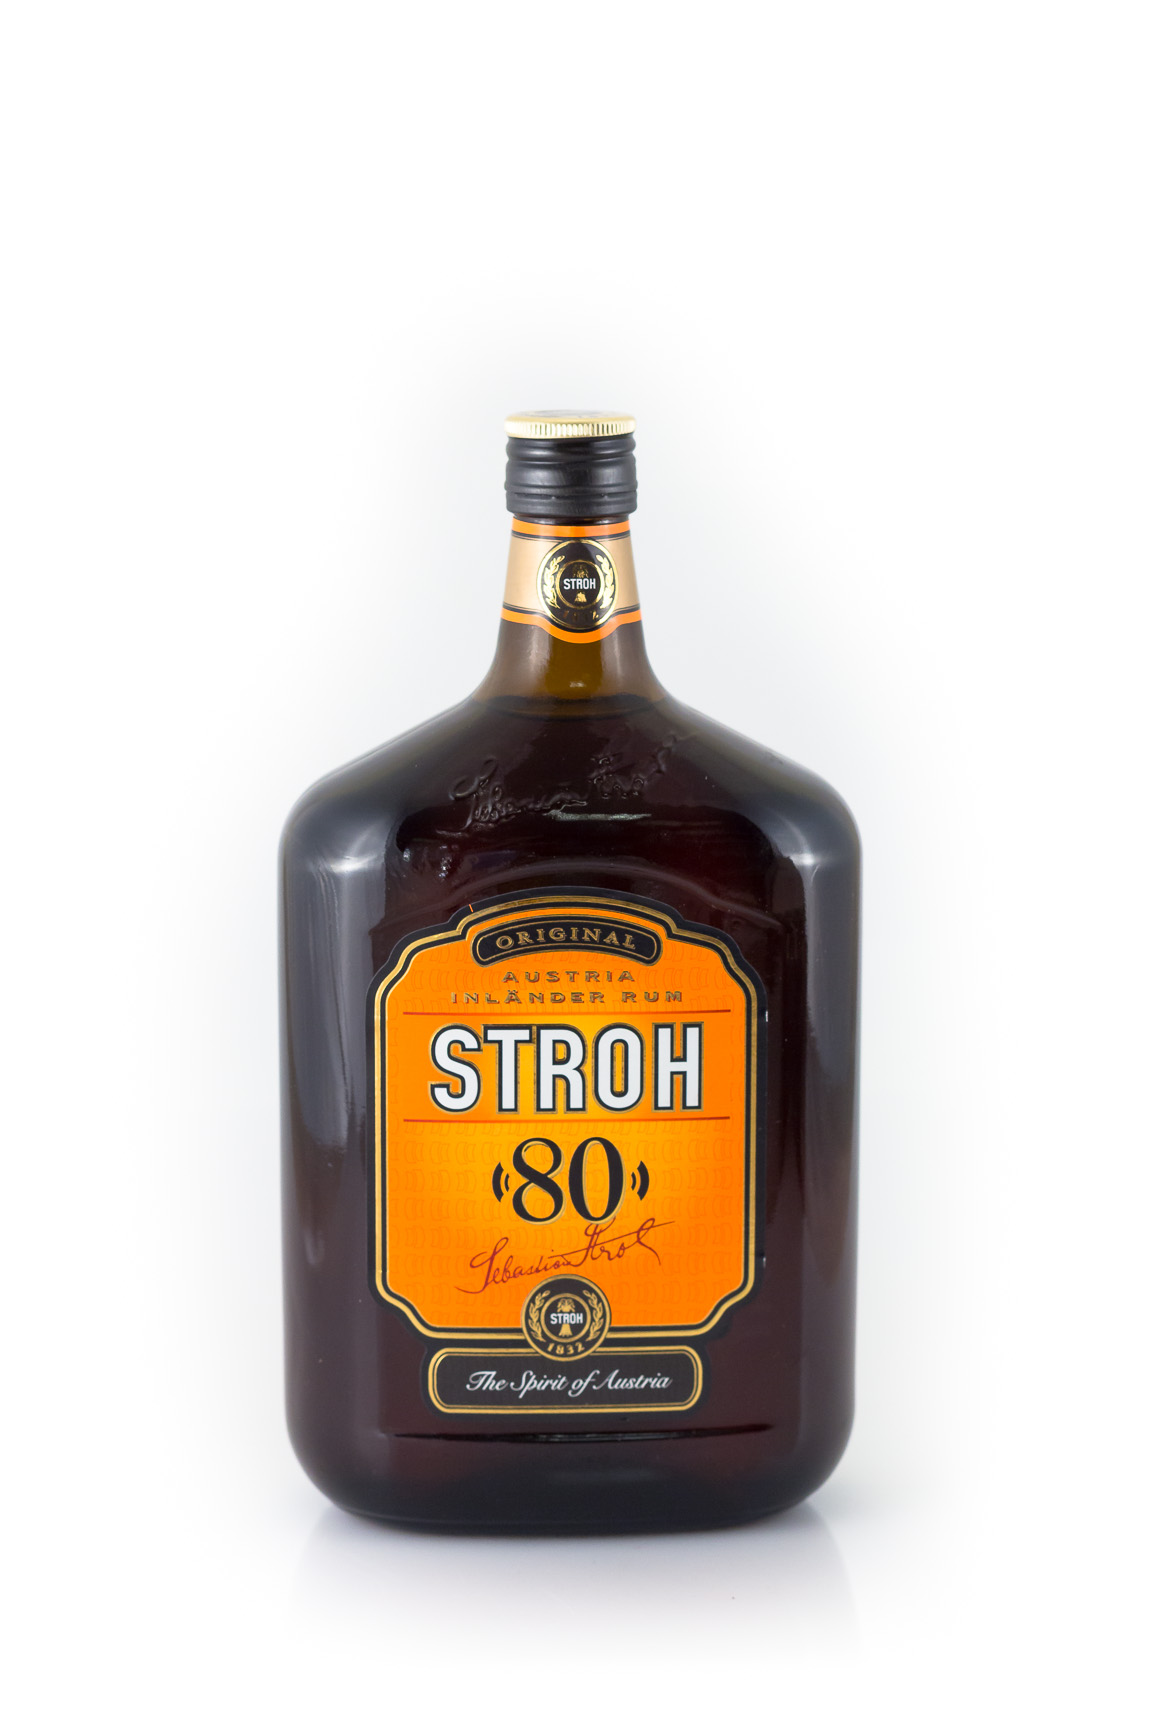 Stroh_80_Original_brauner_Overproof_Rum-F-2353